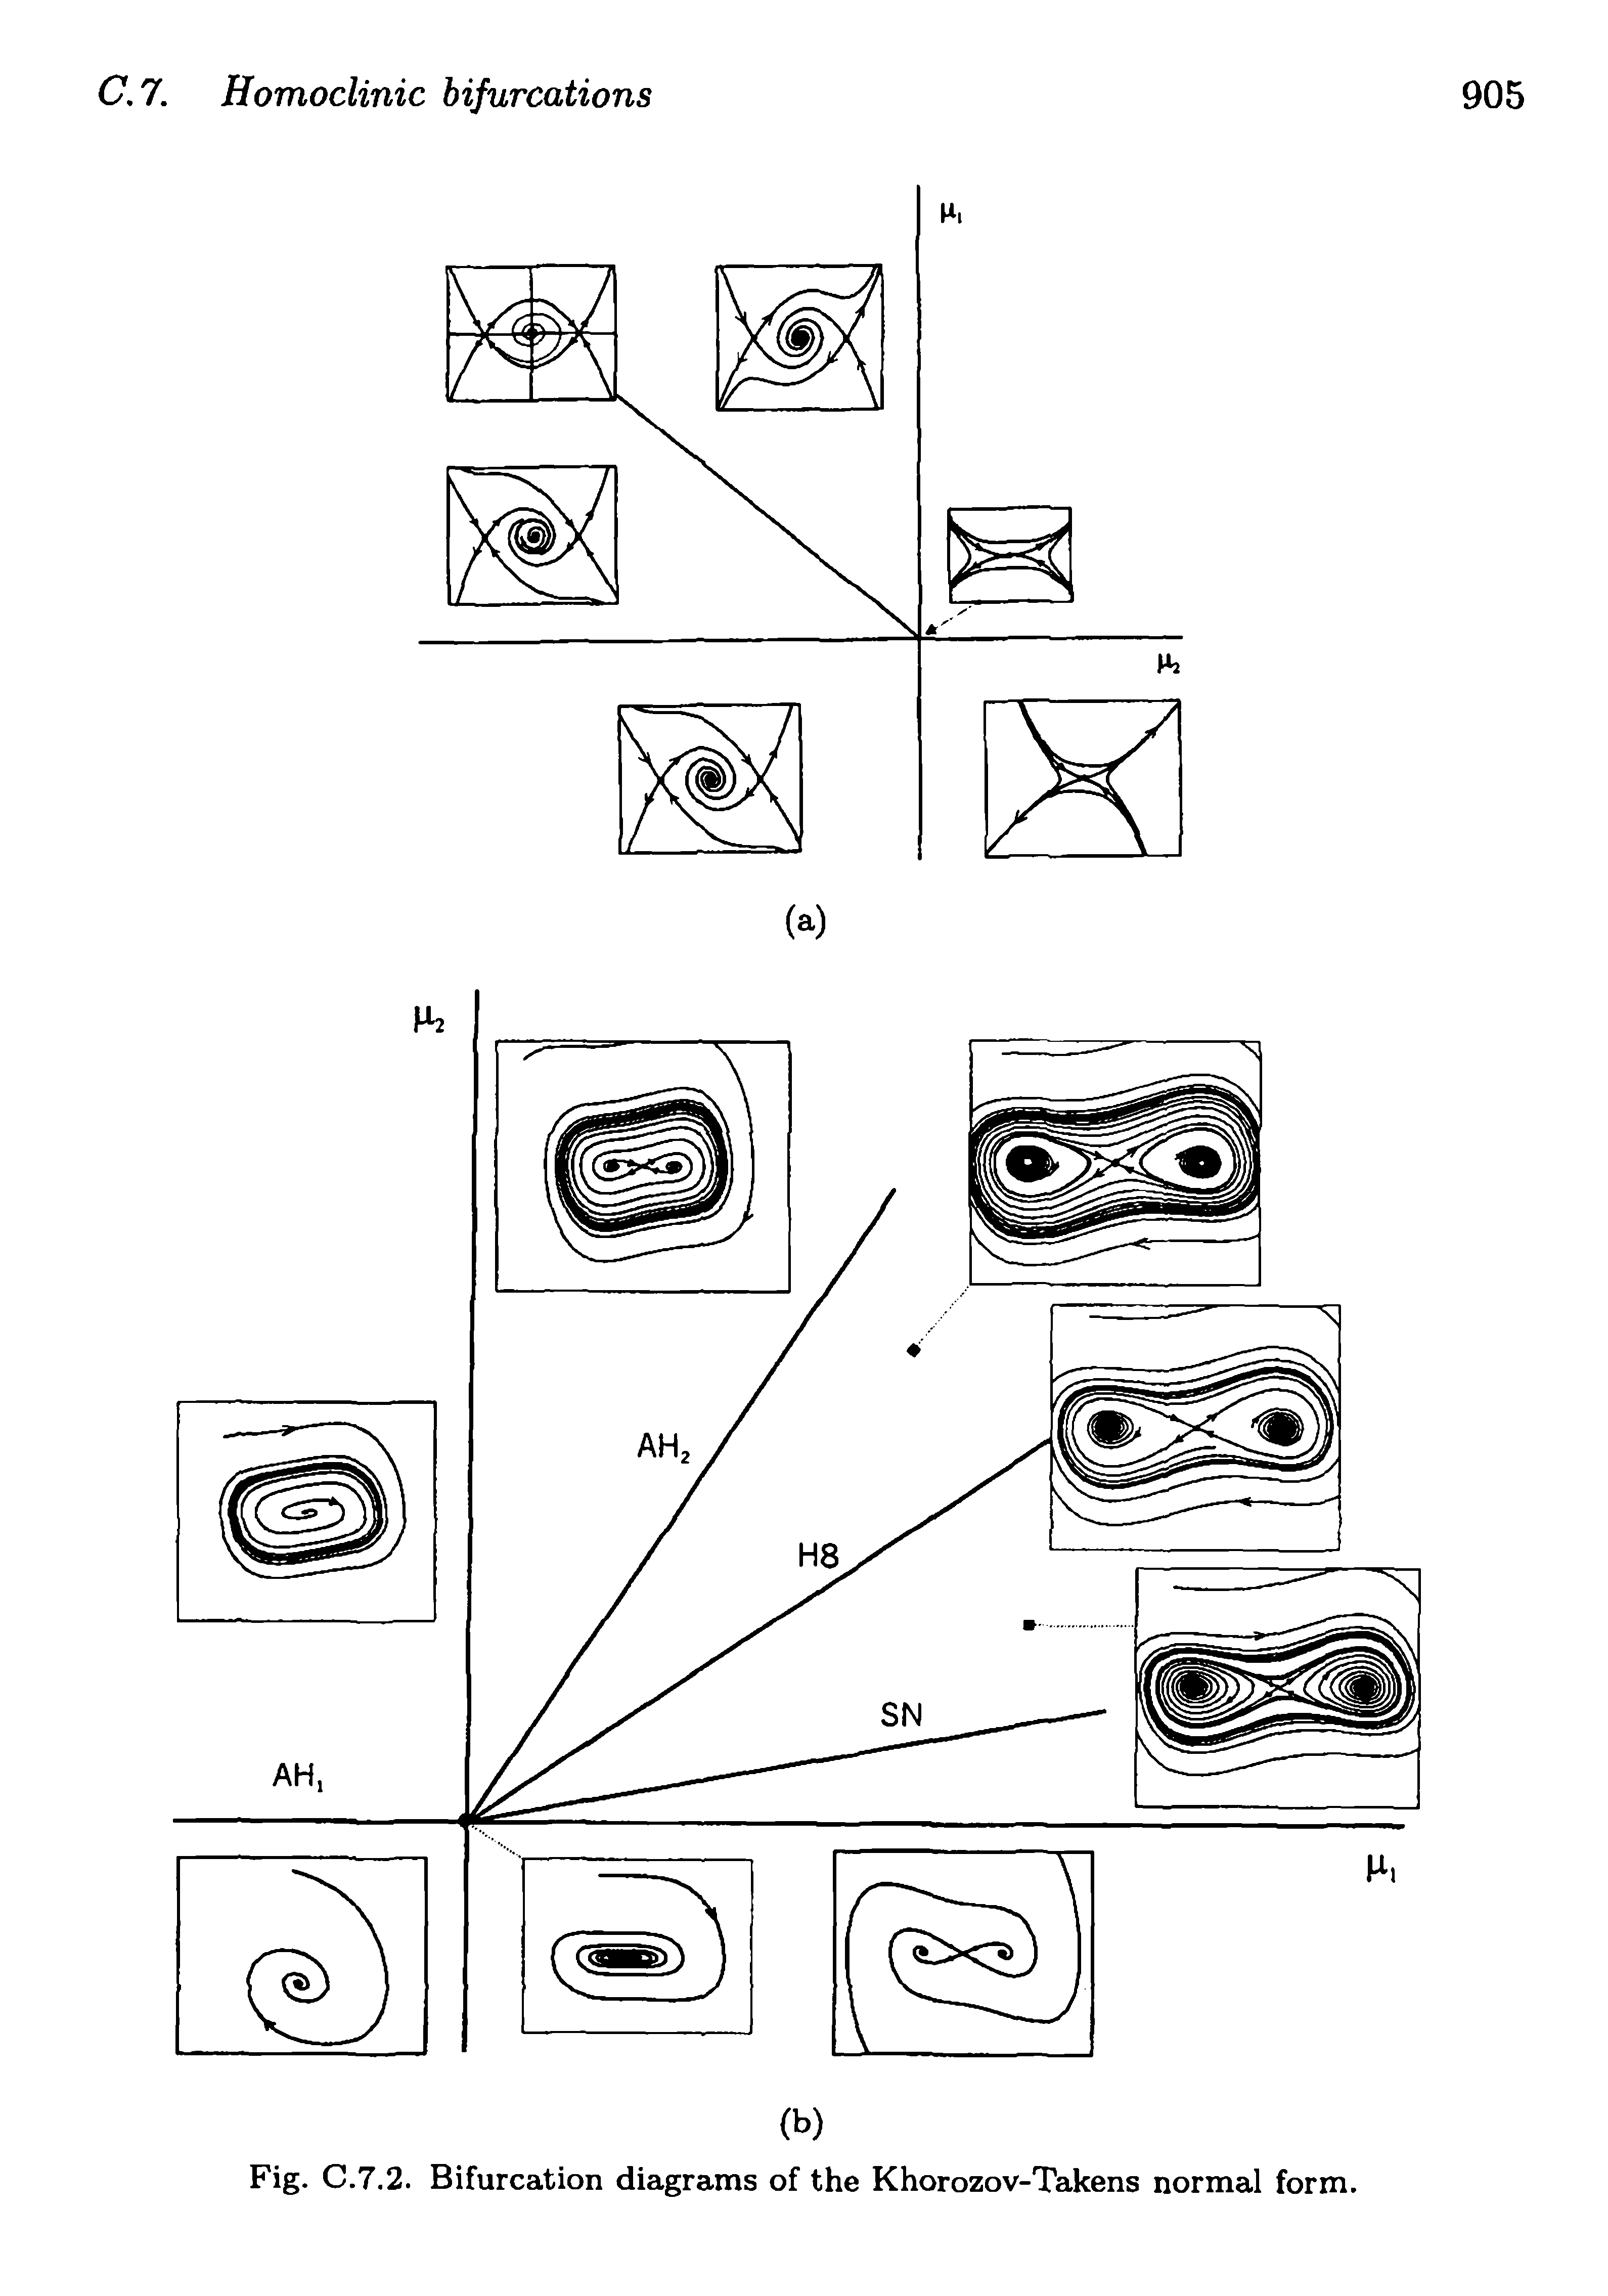 Fig. C.7.2. Bifurcation diagrams of the Khorozov-Takens normal form.